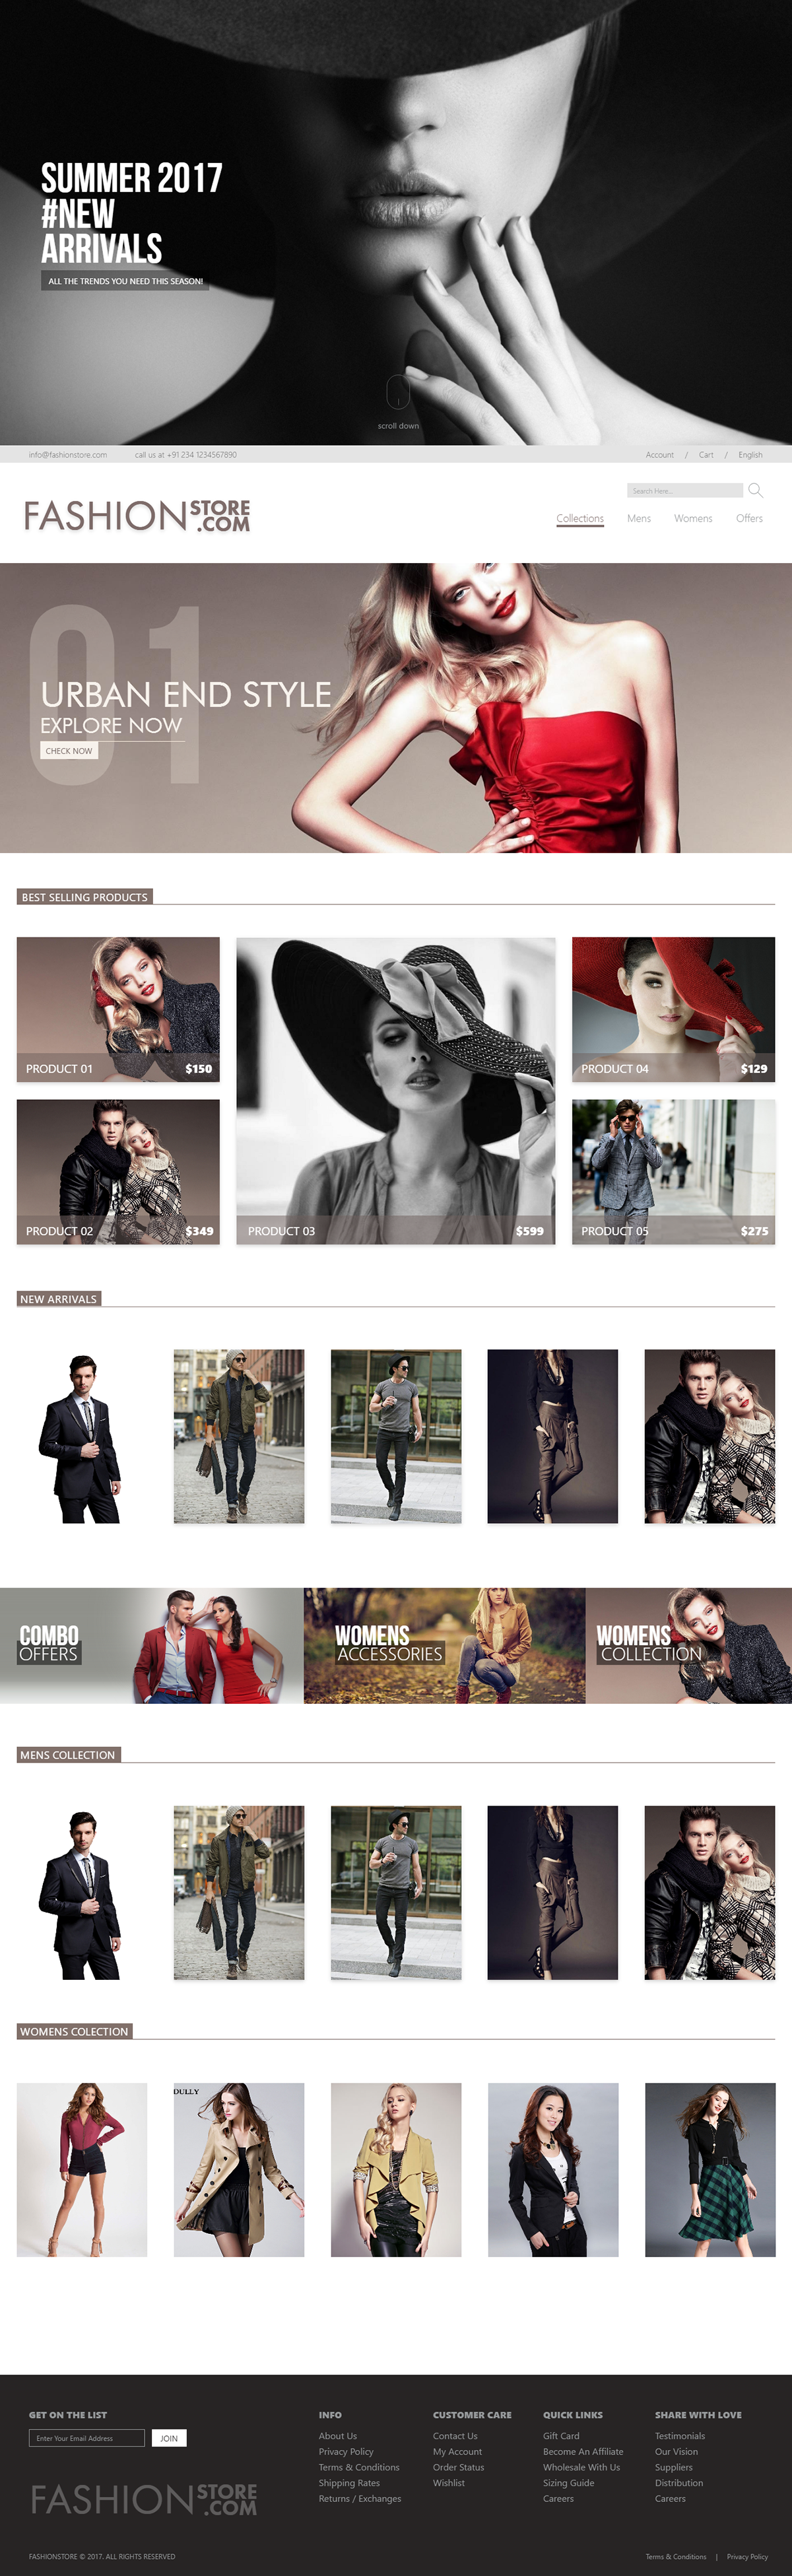 FashionN e-commerce Web Design  Mockup